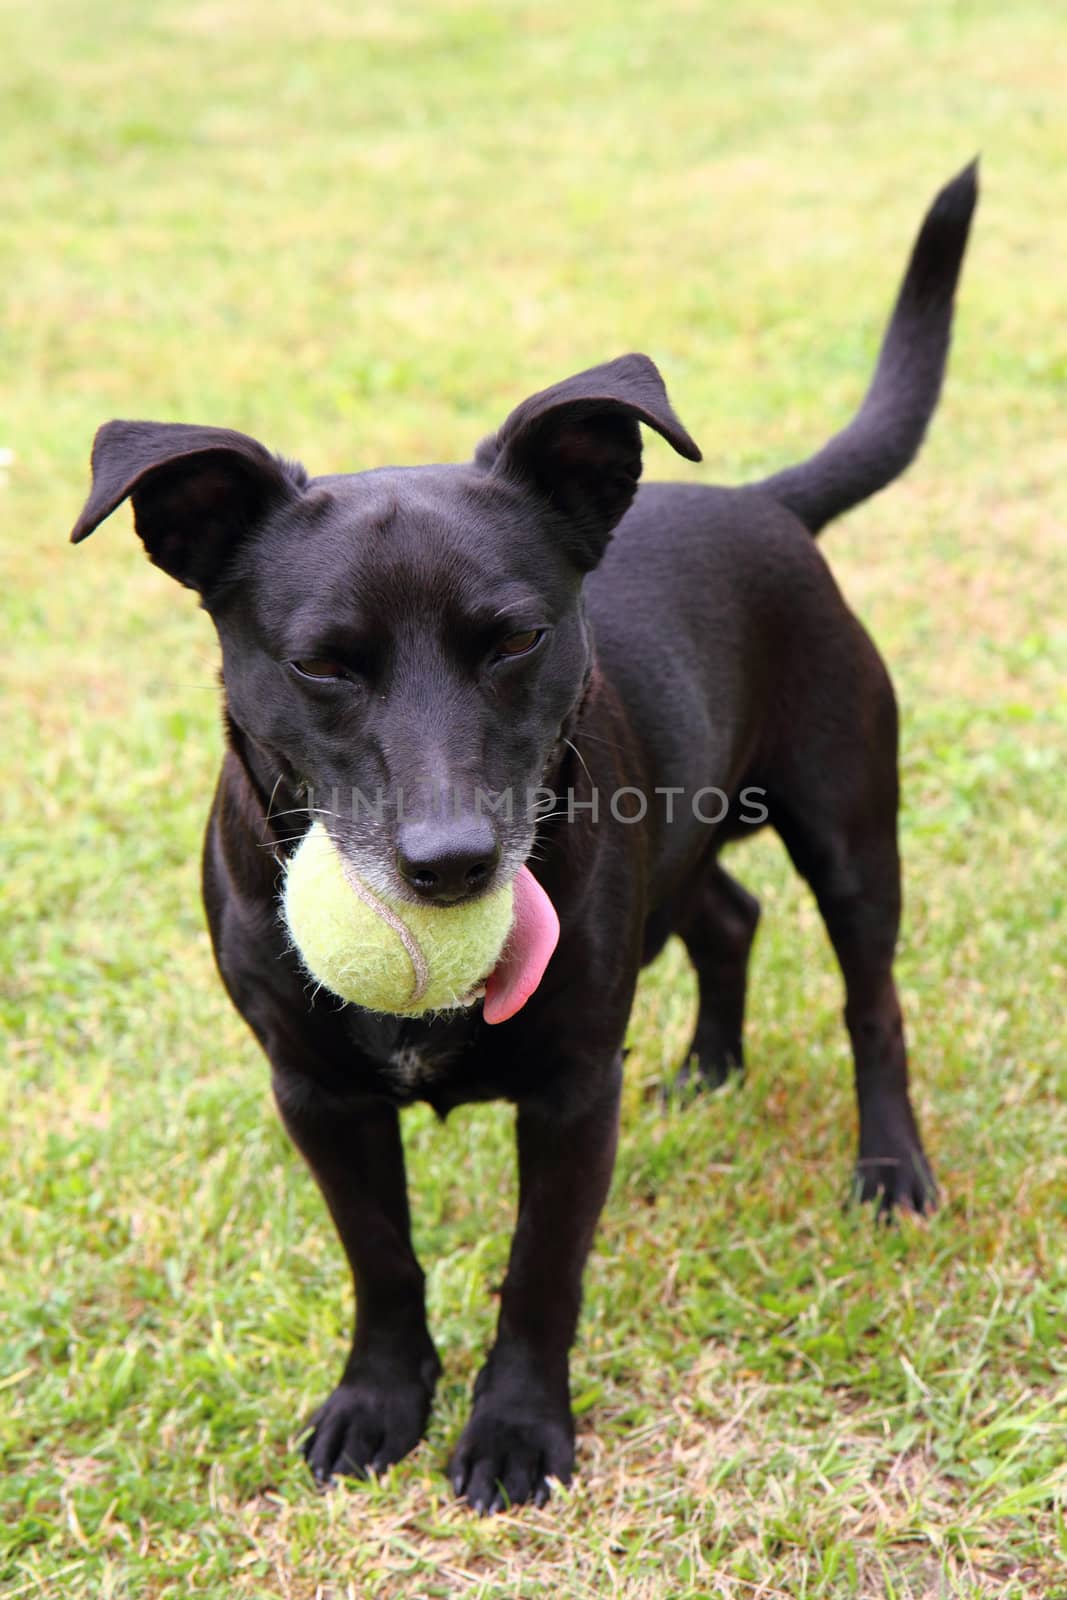 black dog as tennis player by jonnysek